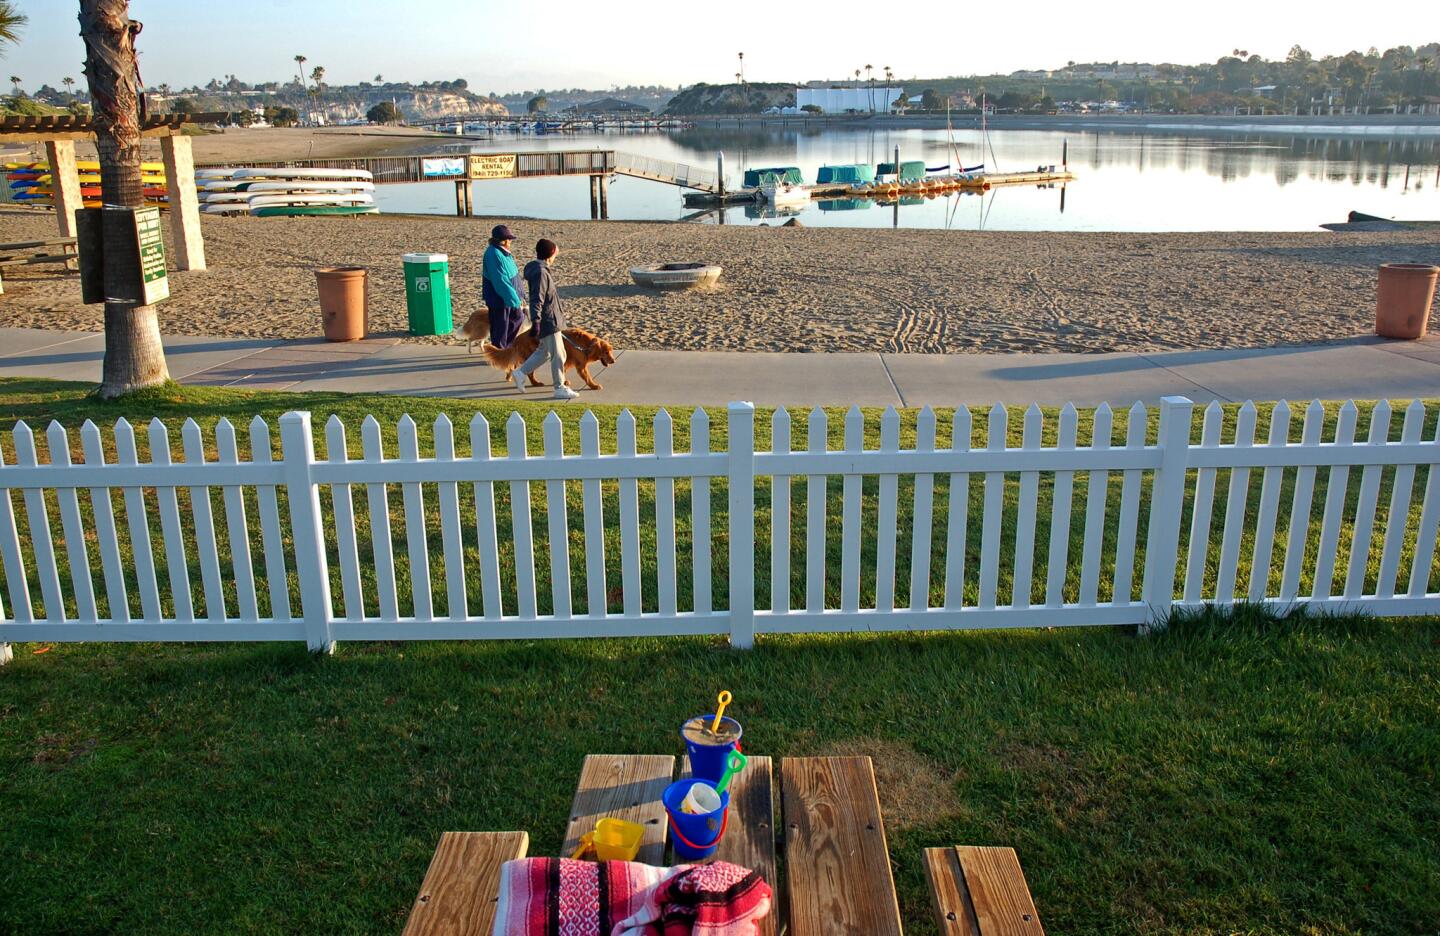 Newport Dunes Waterfront Resort & Marina